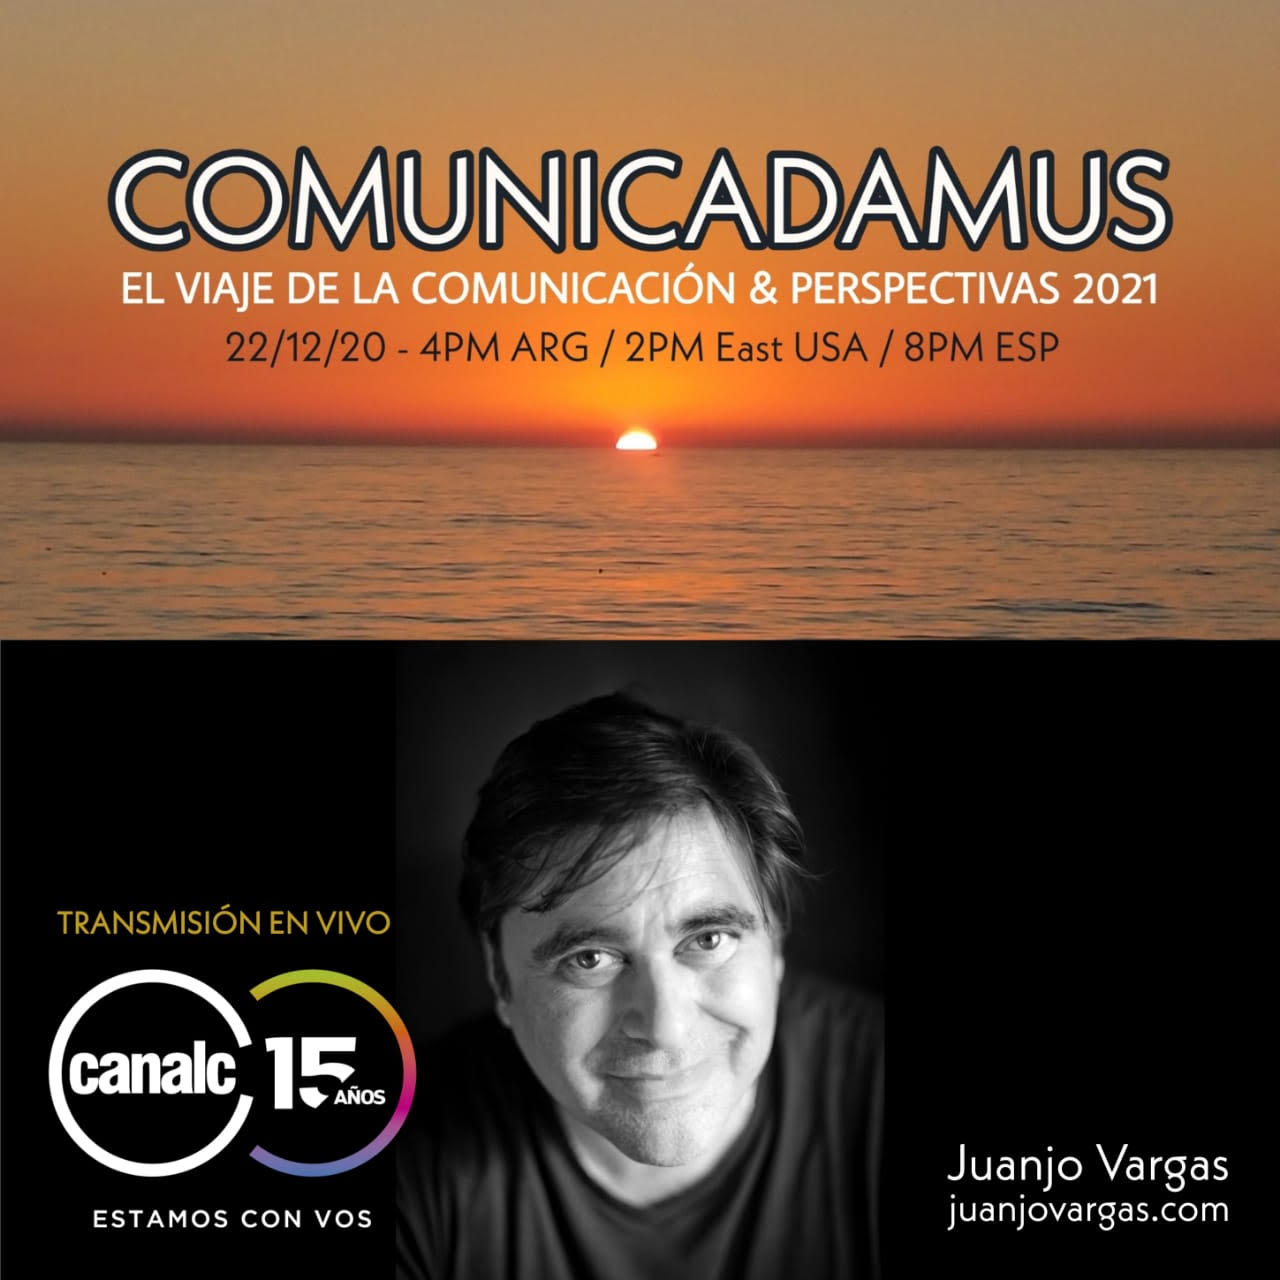 Vivo Canal C: Comunicadamus de Juanjo Vargas • Canal C